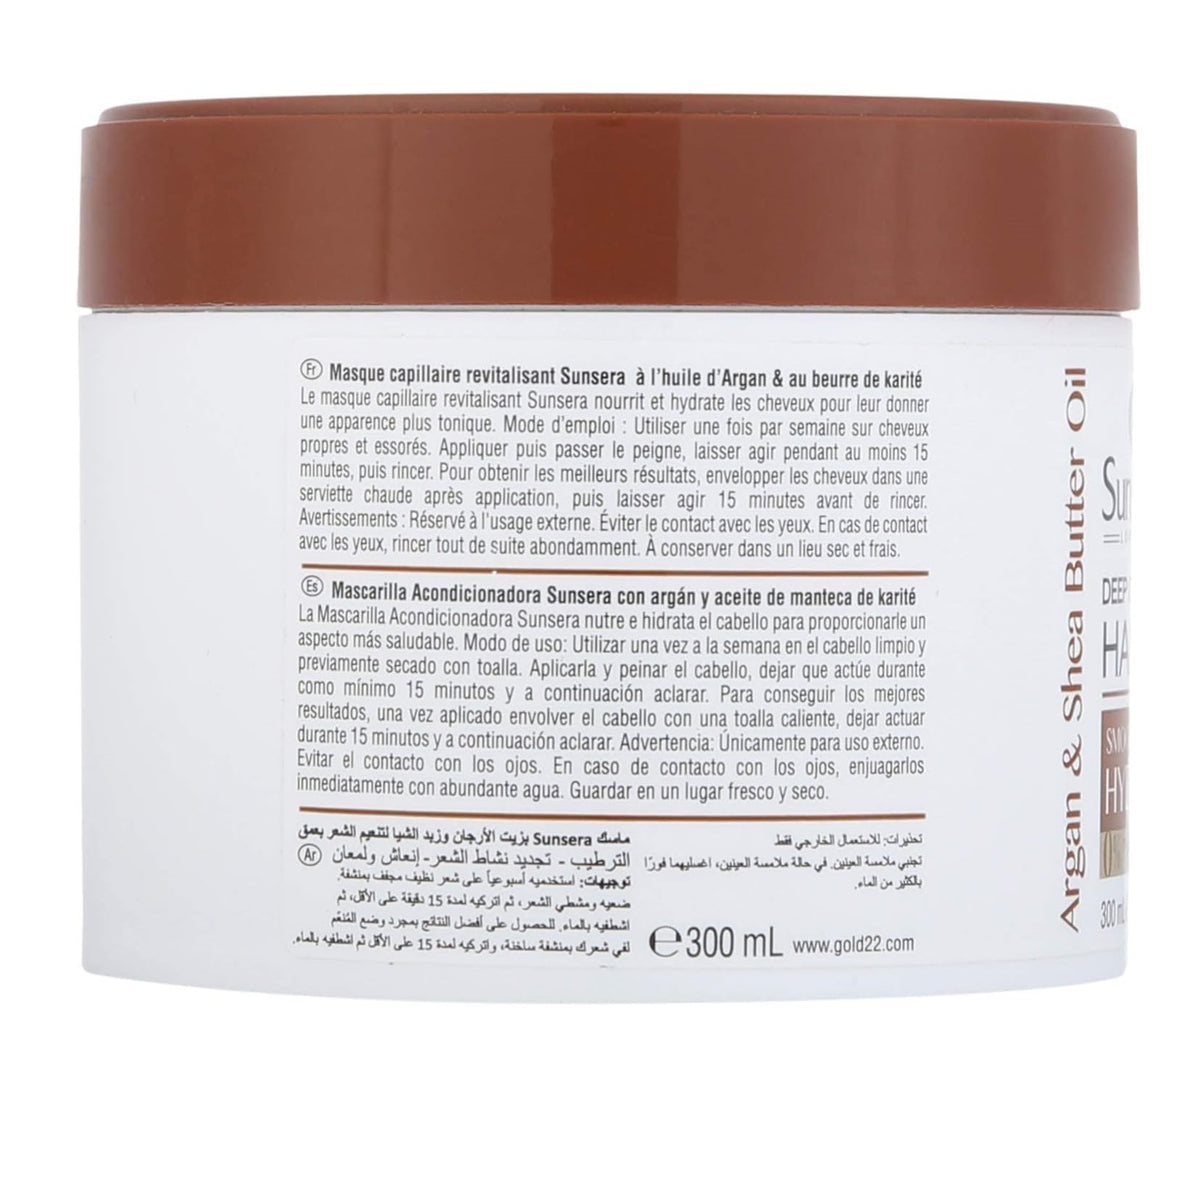 Sunsera Deep Conditioning Hair Mask with Argan & Shea Butter Oil for Damaged & Split Hair - 300ml